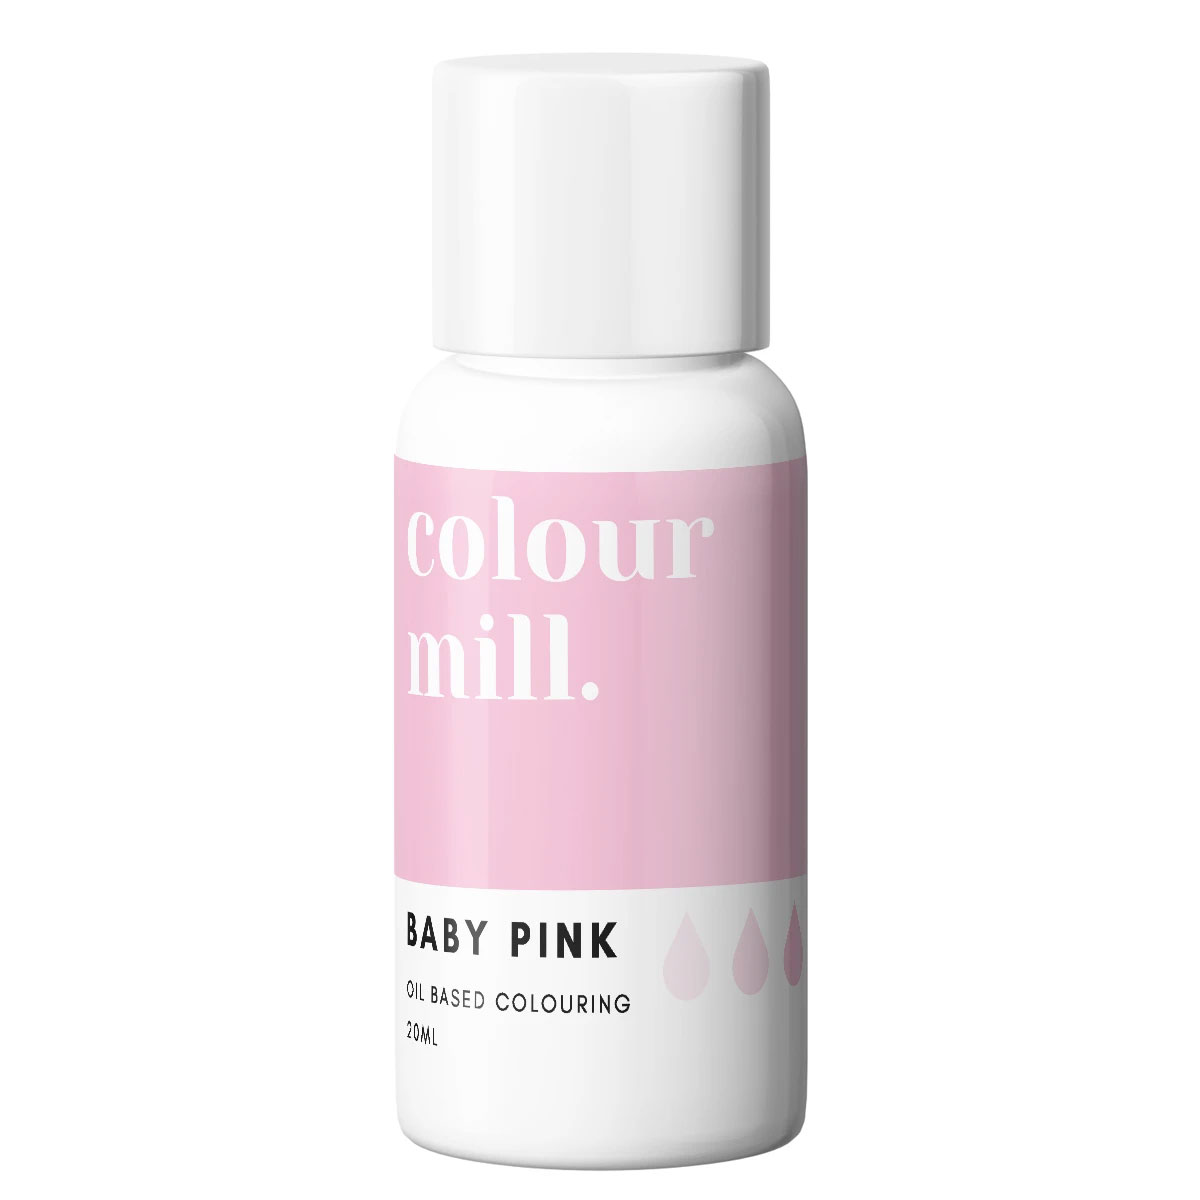 Colour Mill fettlösliche Lebensmittelfarbe - Baby Pink 20ml